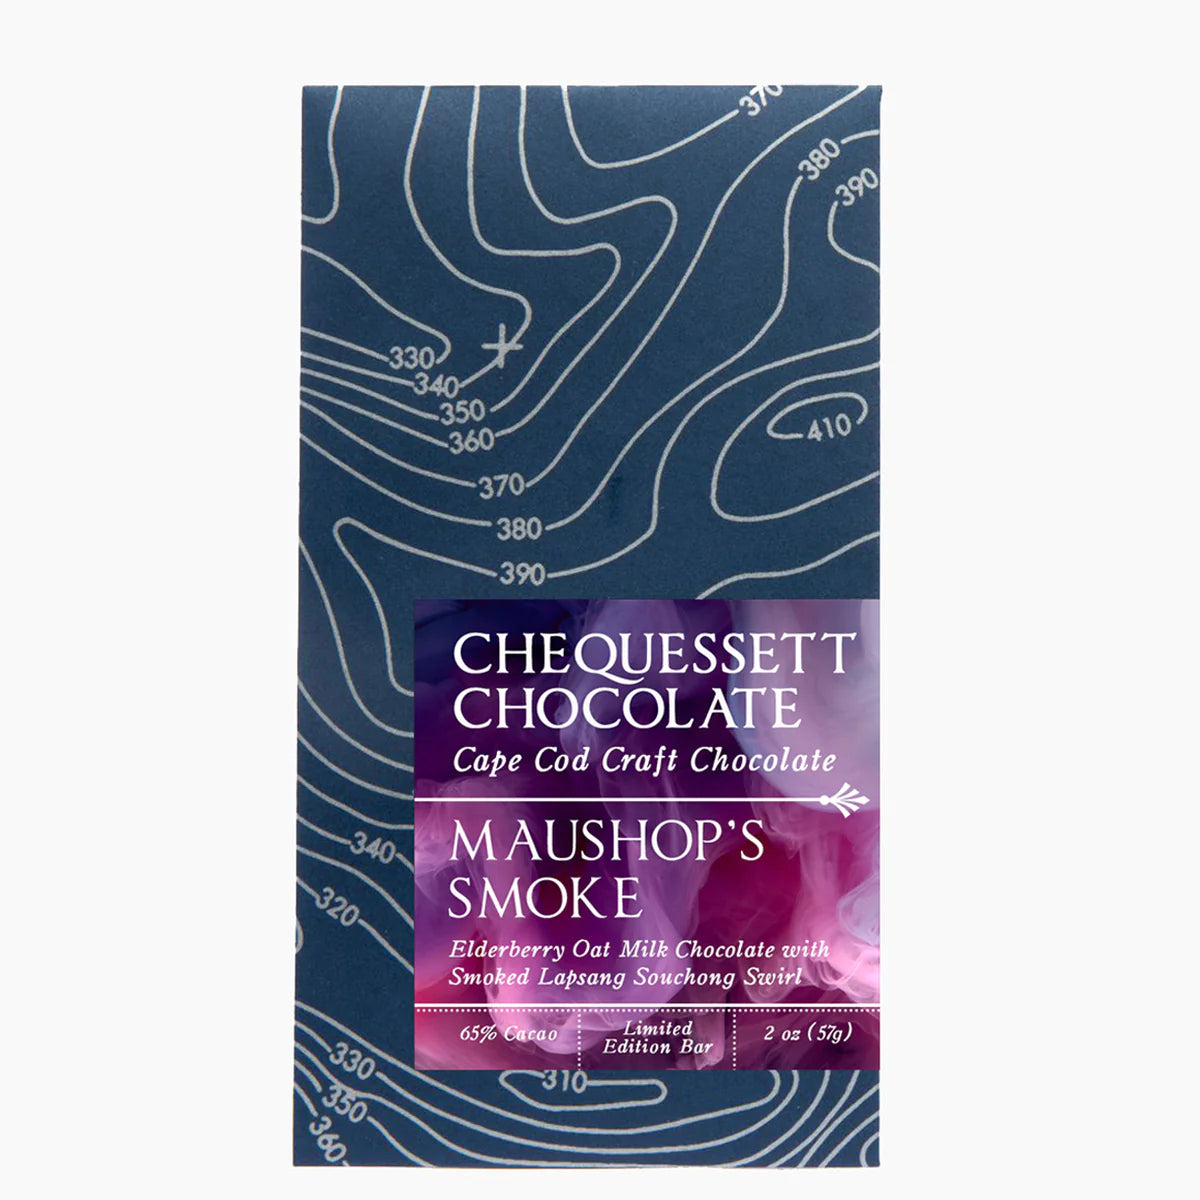 Chequessett Chocolate - Maushop's Smoke